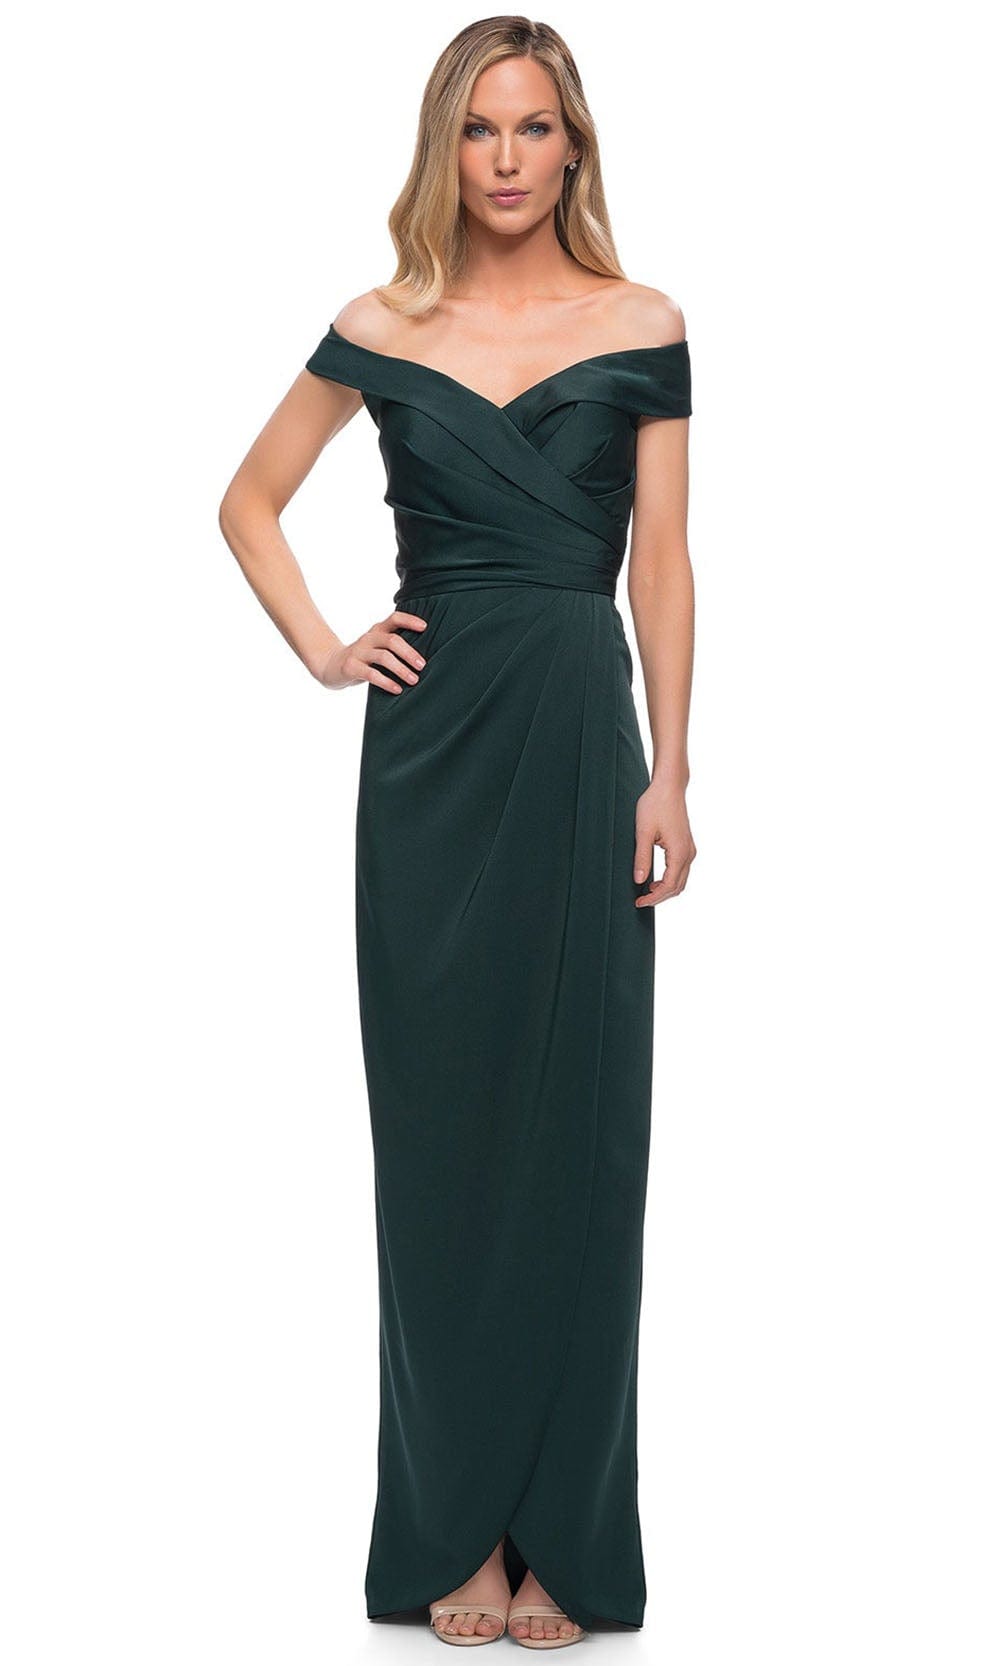 Image of La Femme 25206 - Ruched Cap Sleeved Long Jersey Dress